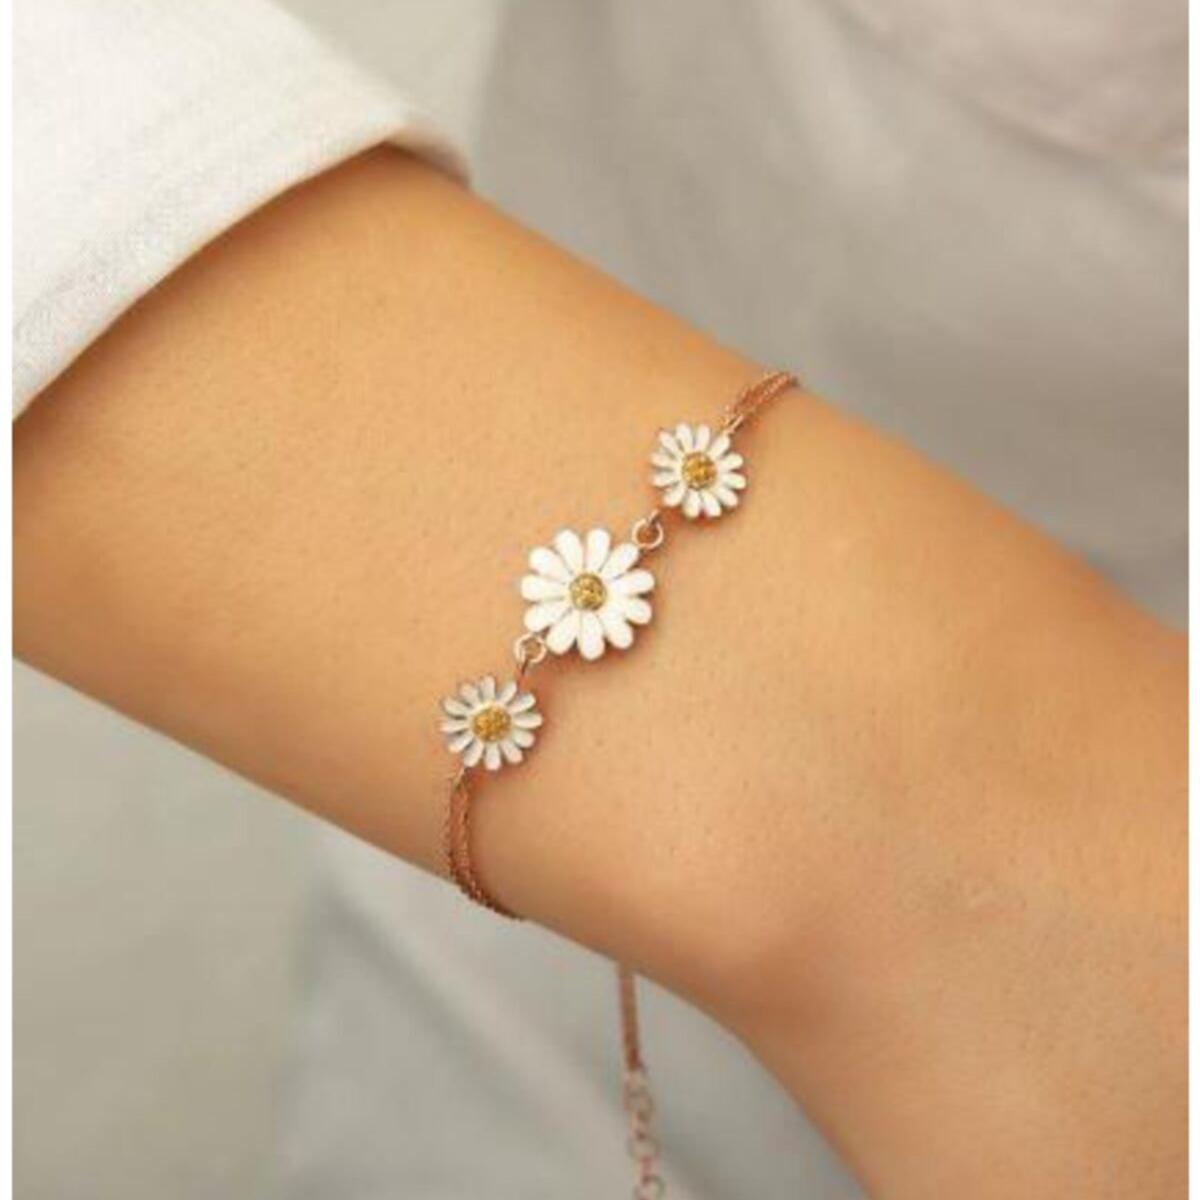 Daisy Chain Bracelet • Daisy Bead Bracelet • Christmas Gift For Wife - Trending Silver Gifts